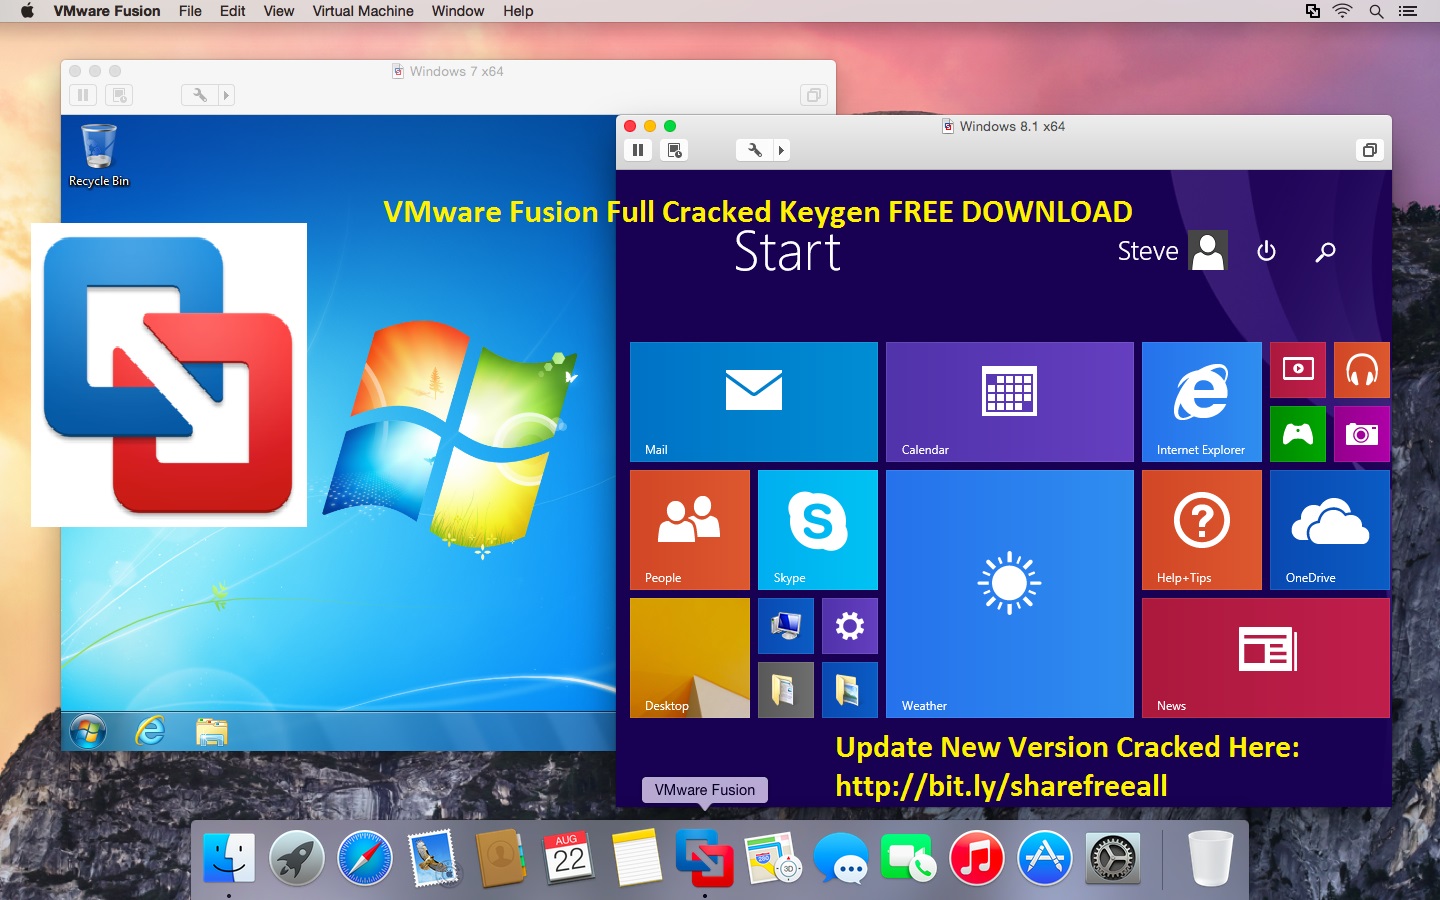 VMware Fusion 7.0.1-2217440 Crack Keygen For Mac OS X